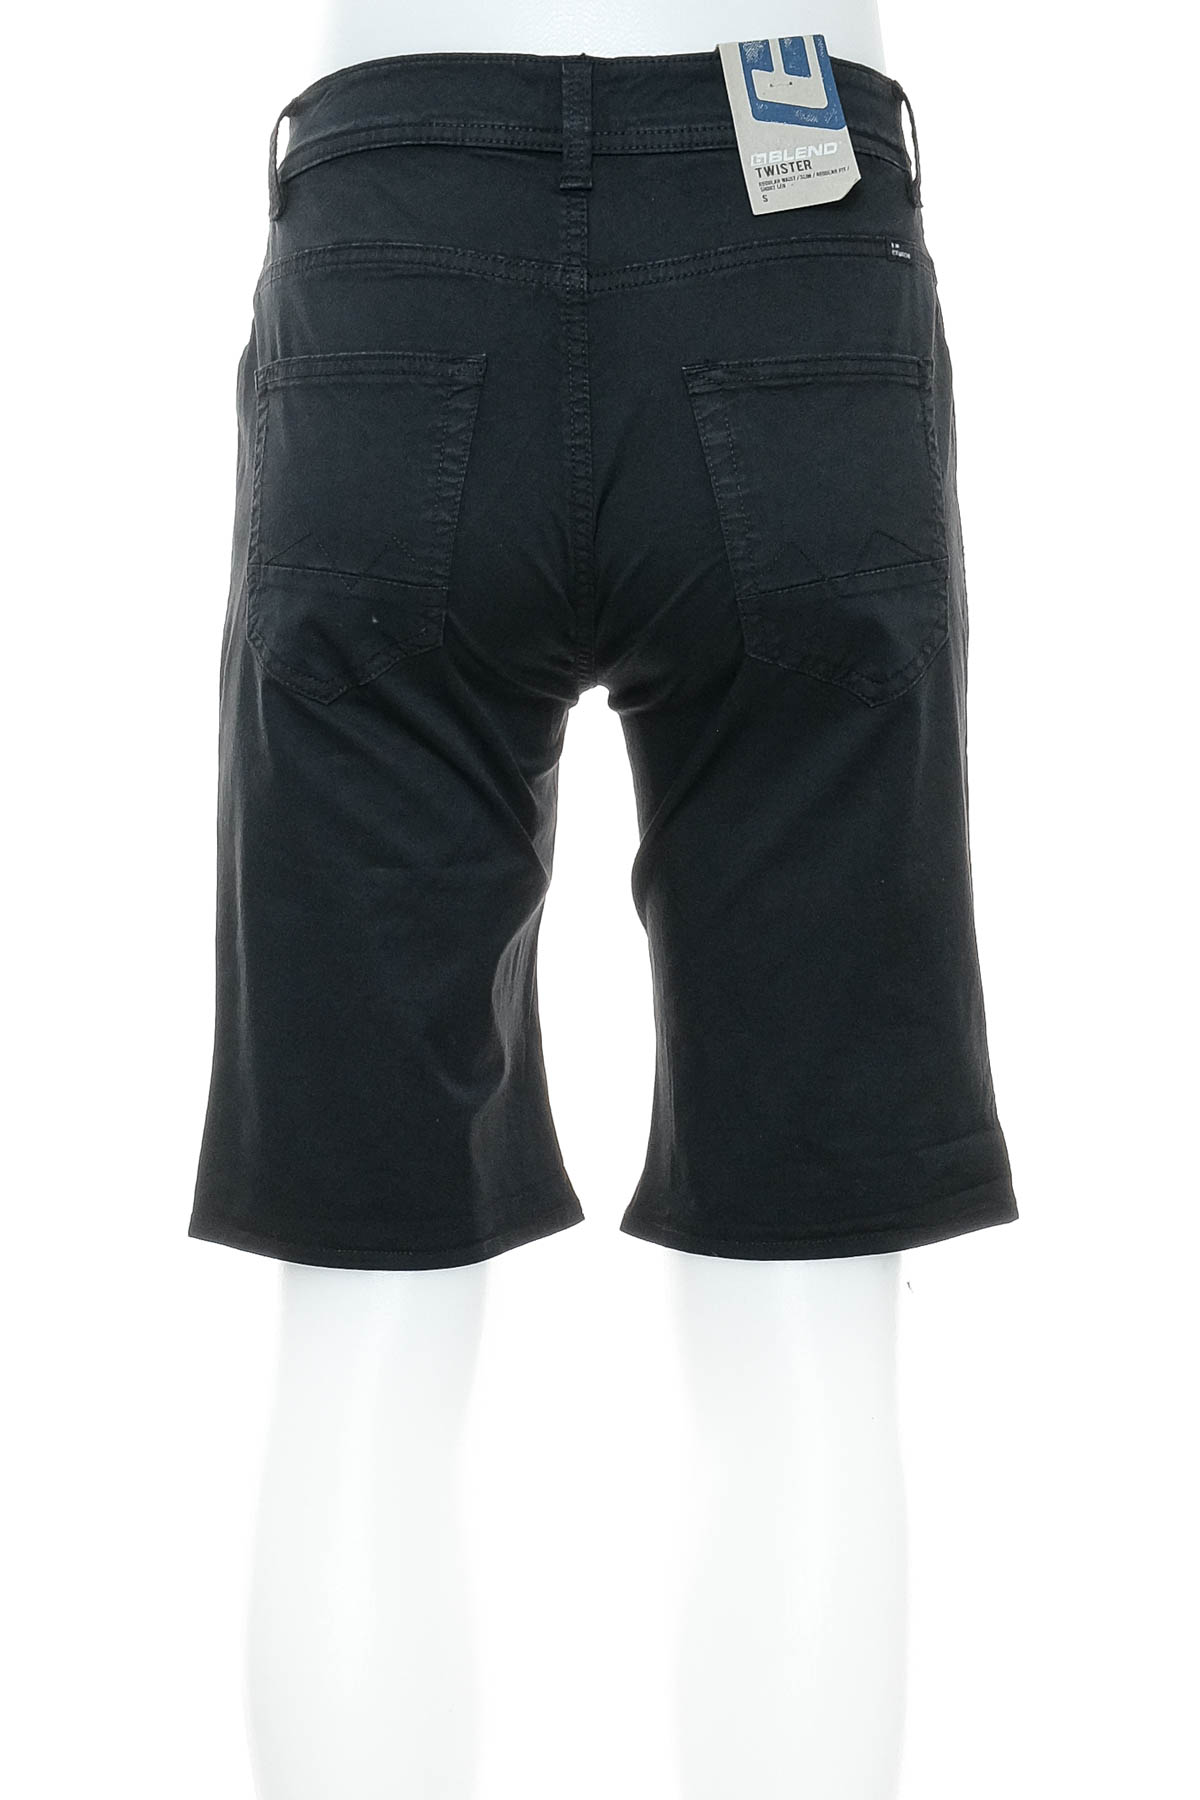 Men's shorts - Blend - 1